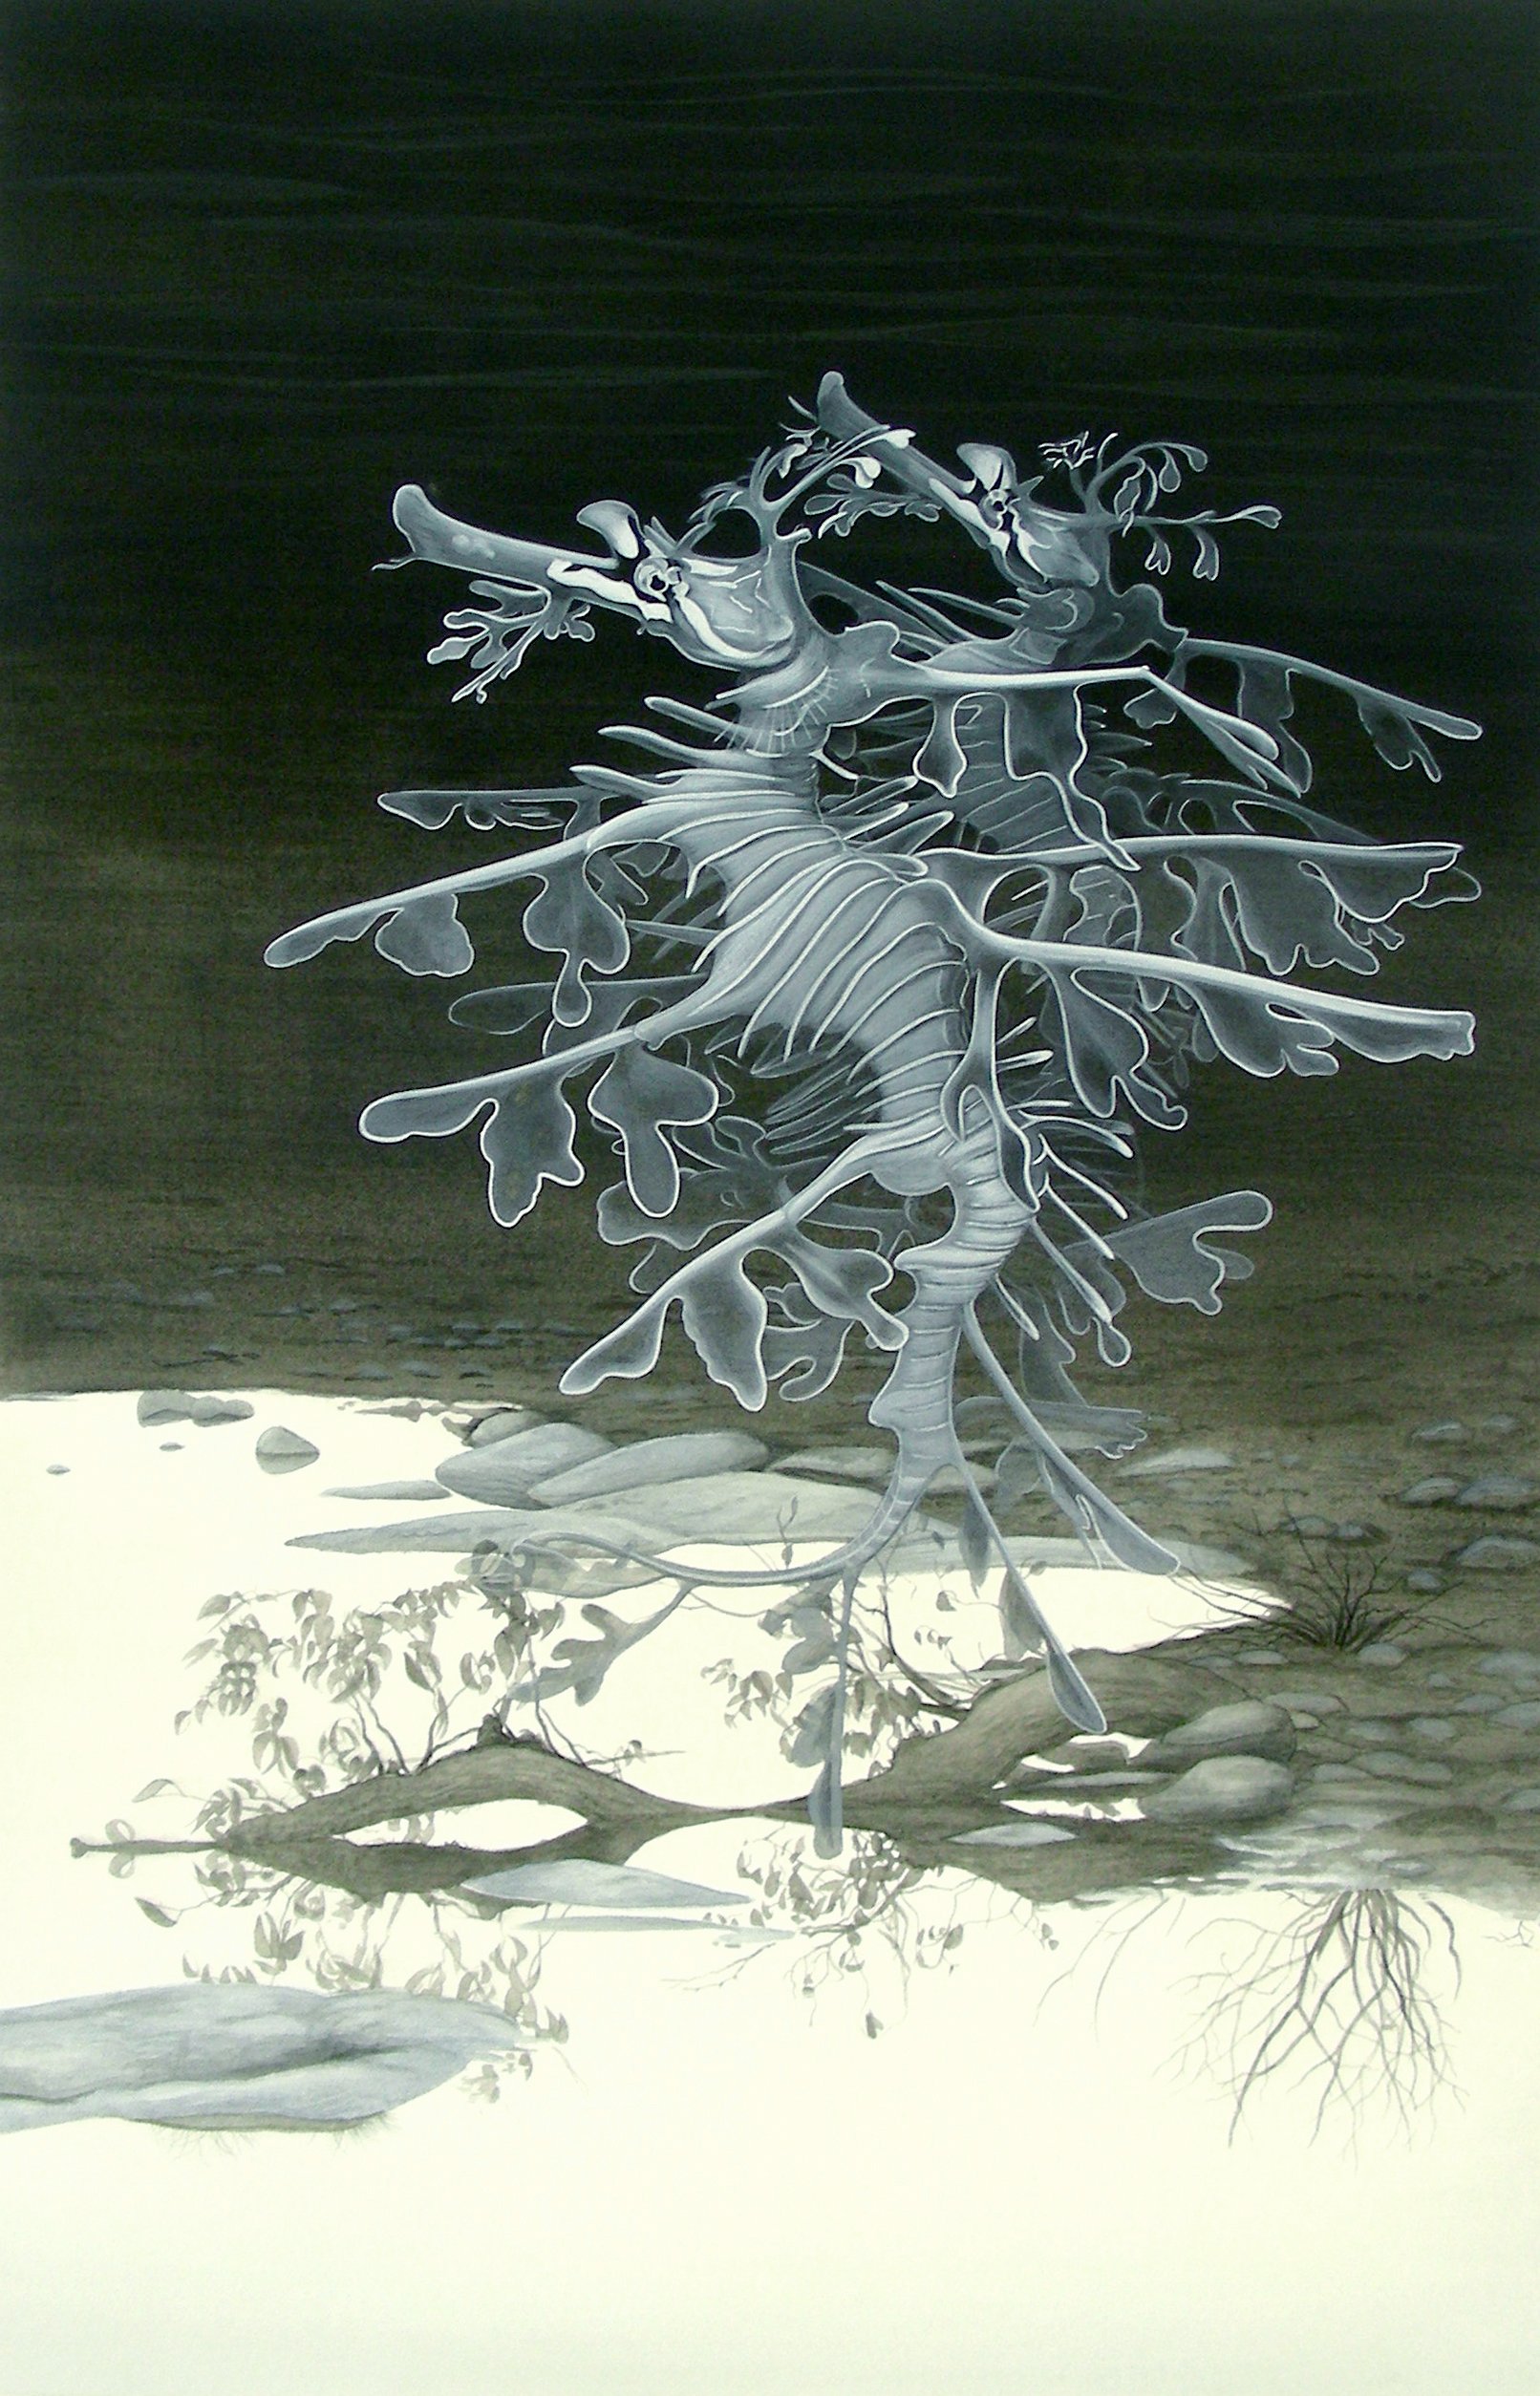        Unison, 24” x 18”, watercolor on paper, 2010